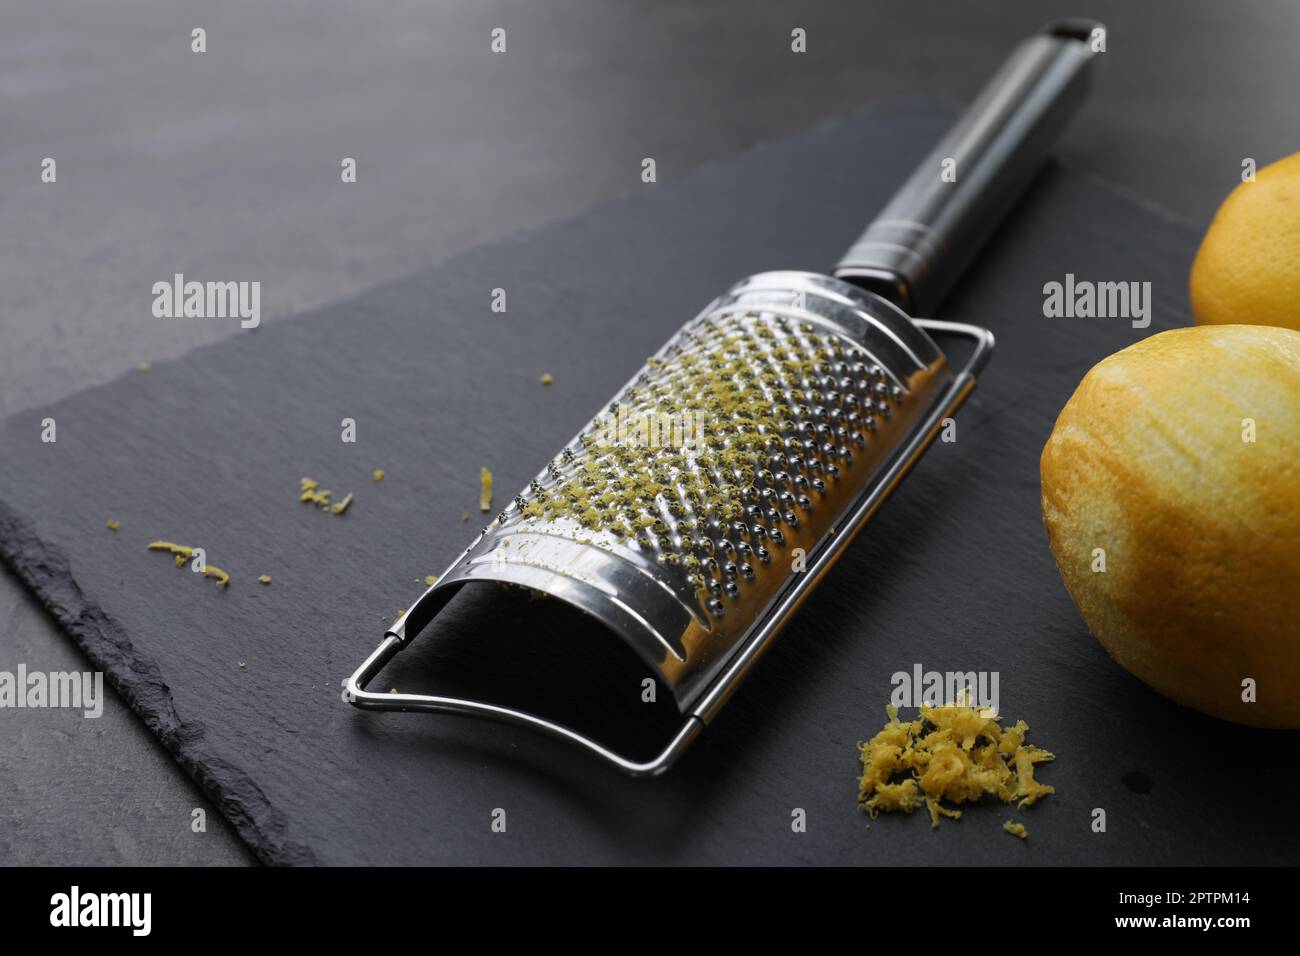 Grattugia e limoni freschi su tavola nera Foto stock - Alamy